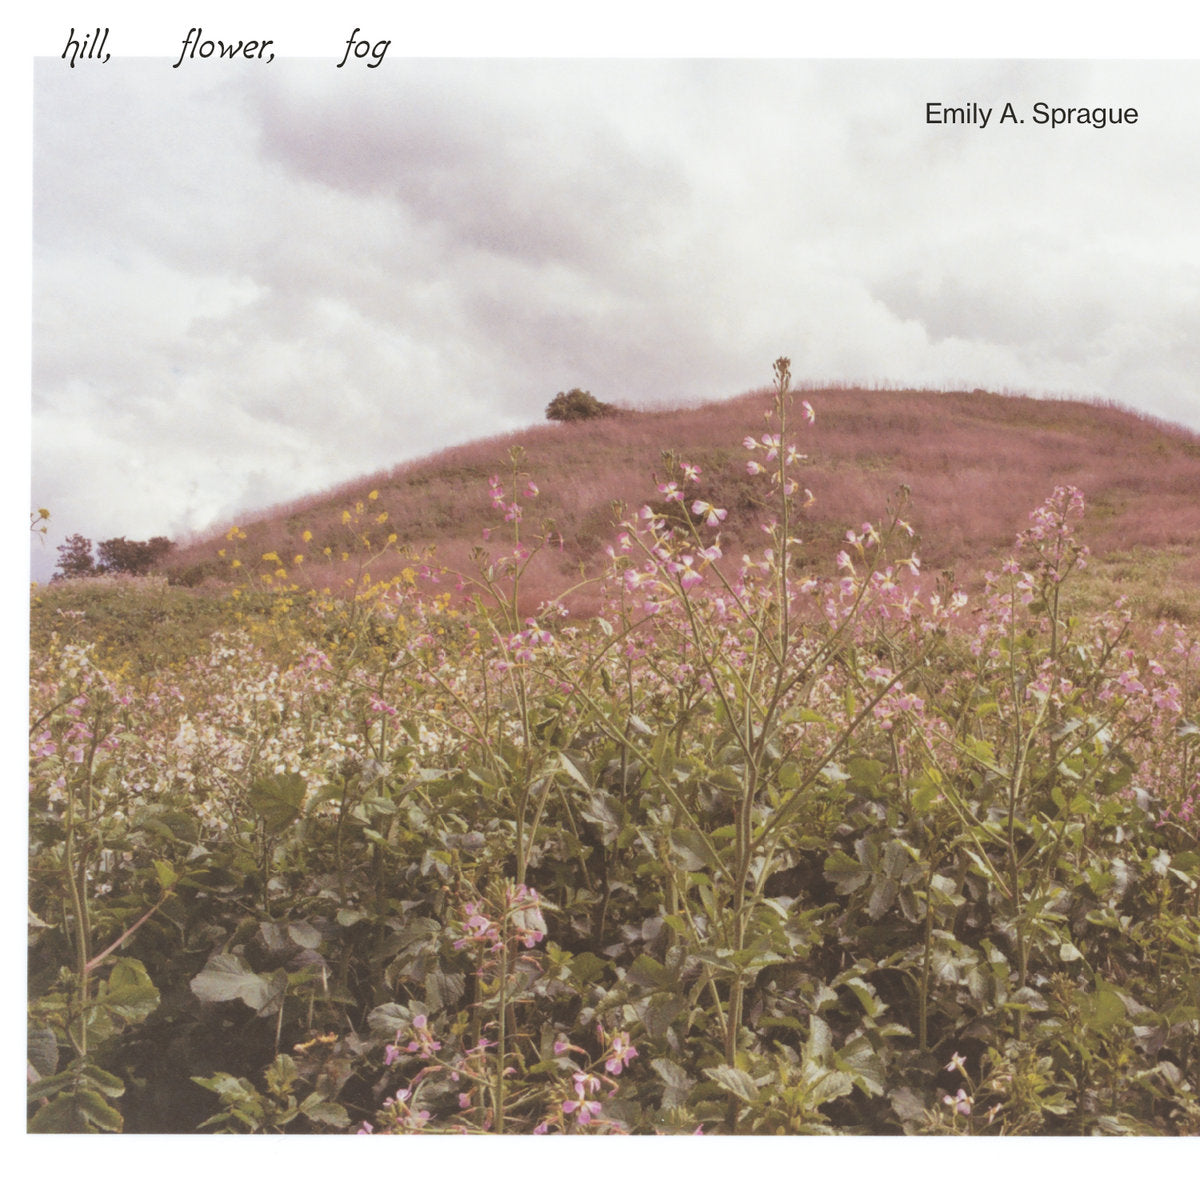 EMILY A. SPRAGUE "HILL, FLOWER, FOG"